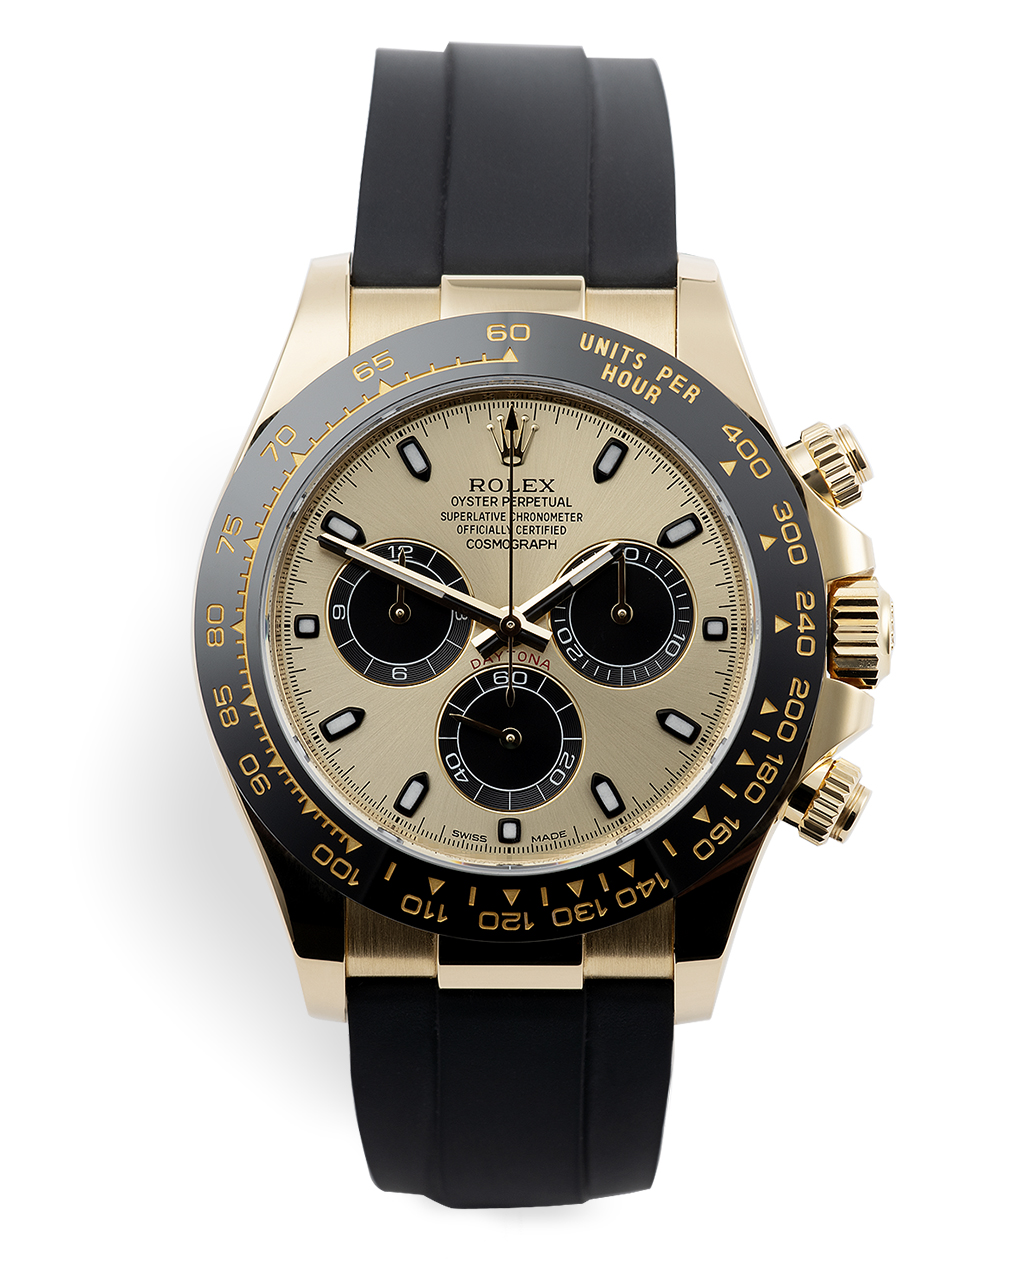 Rolex Cosmograph Daytona Watches | ref 116518LN | Rolex Warranty to ...